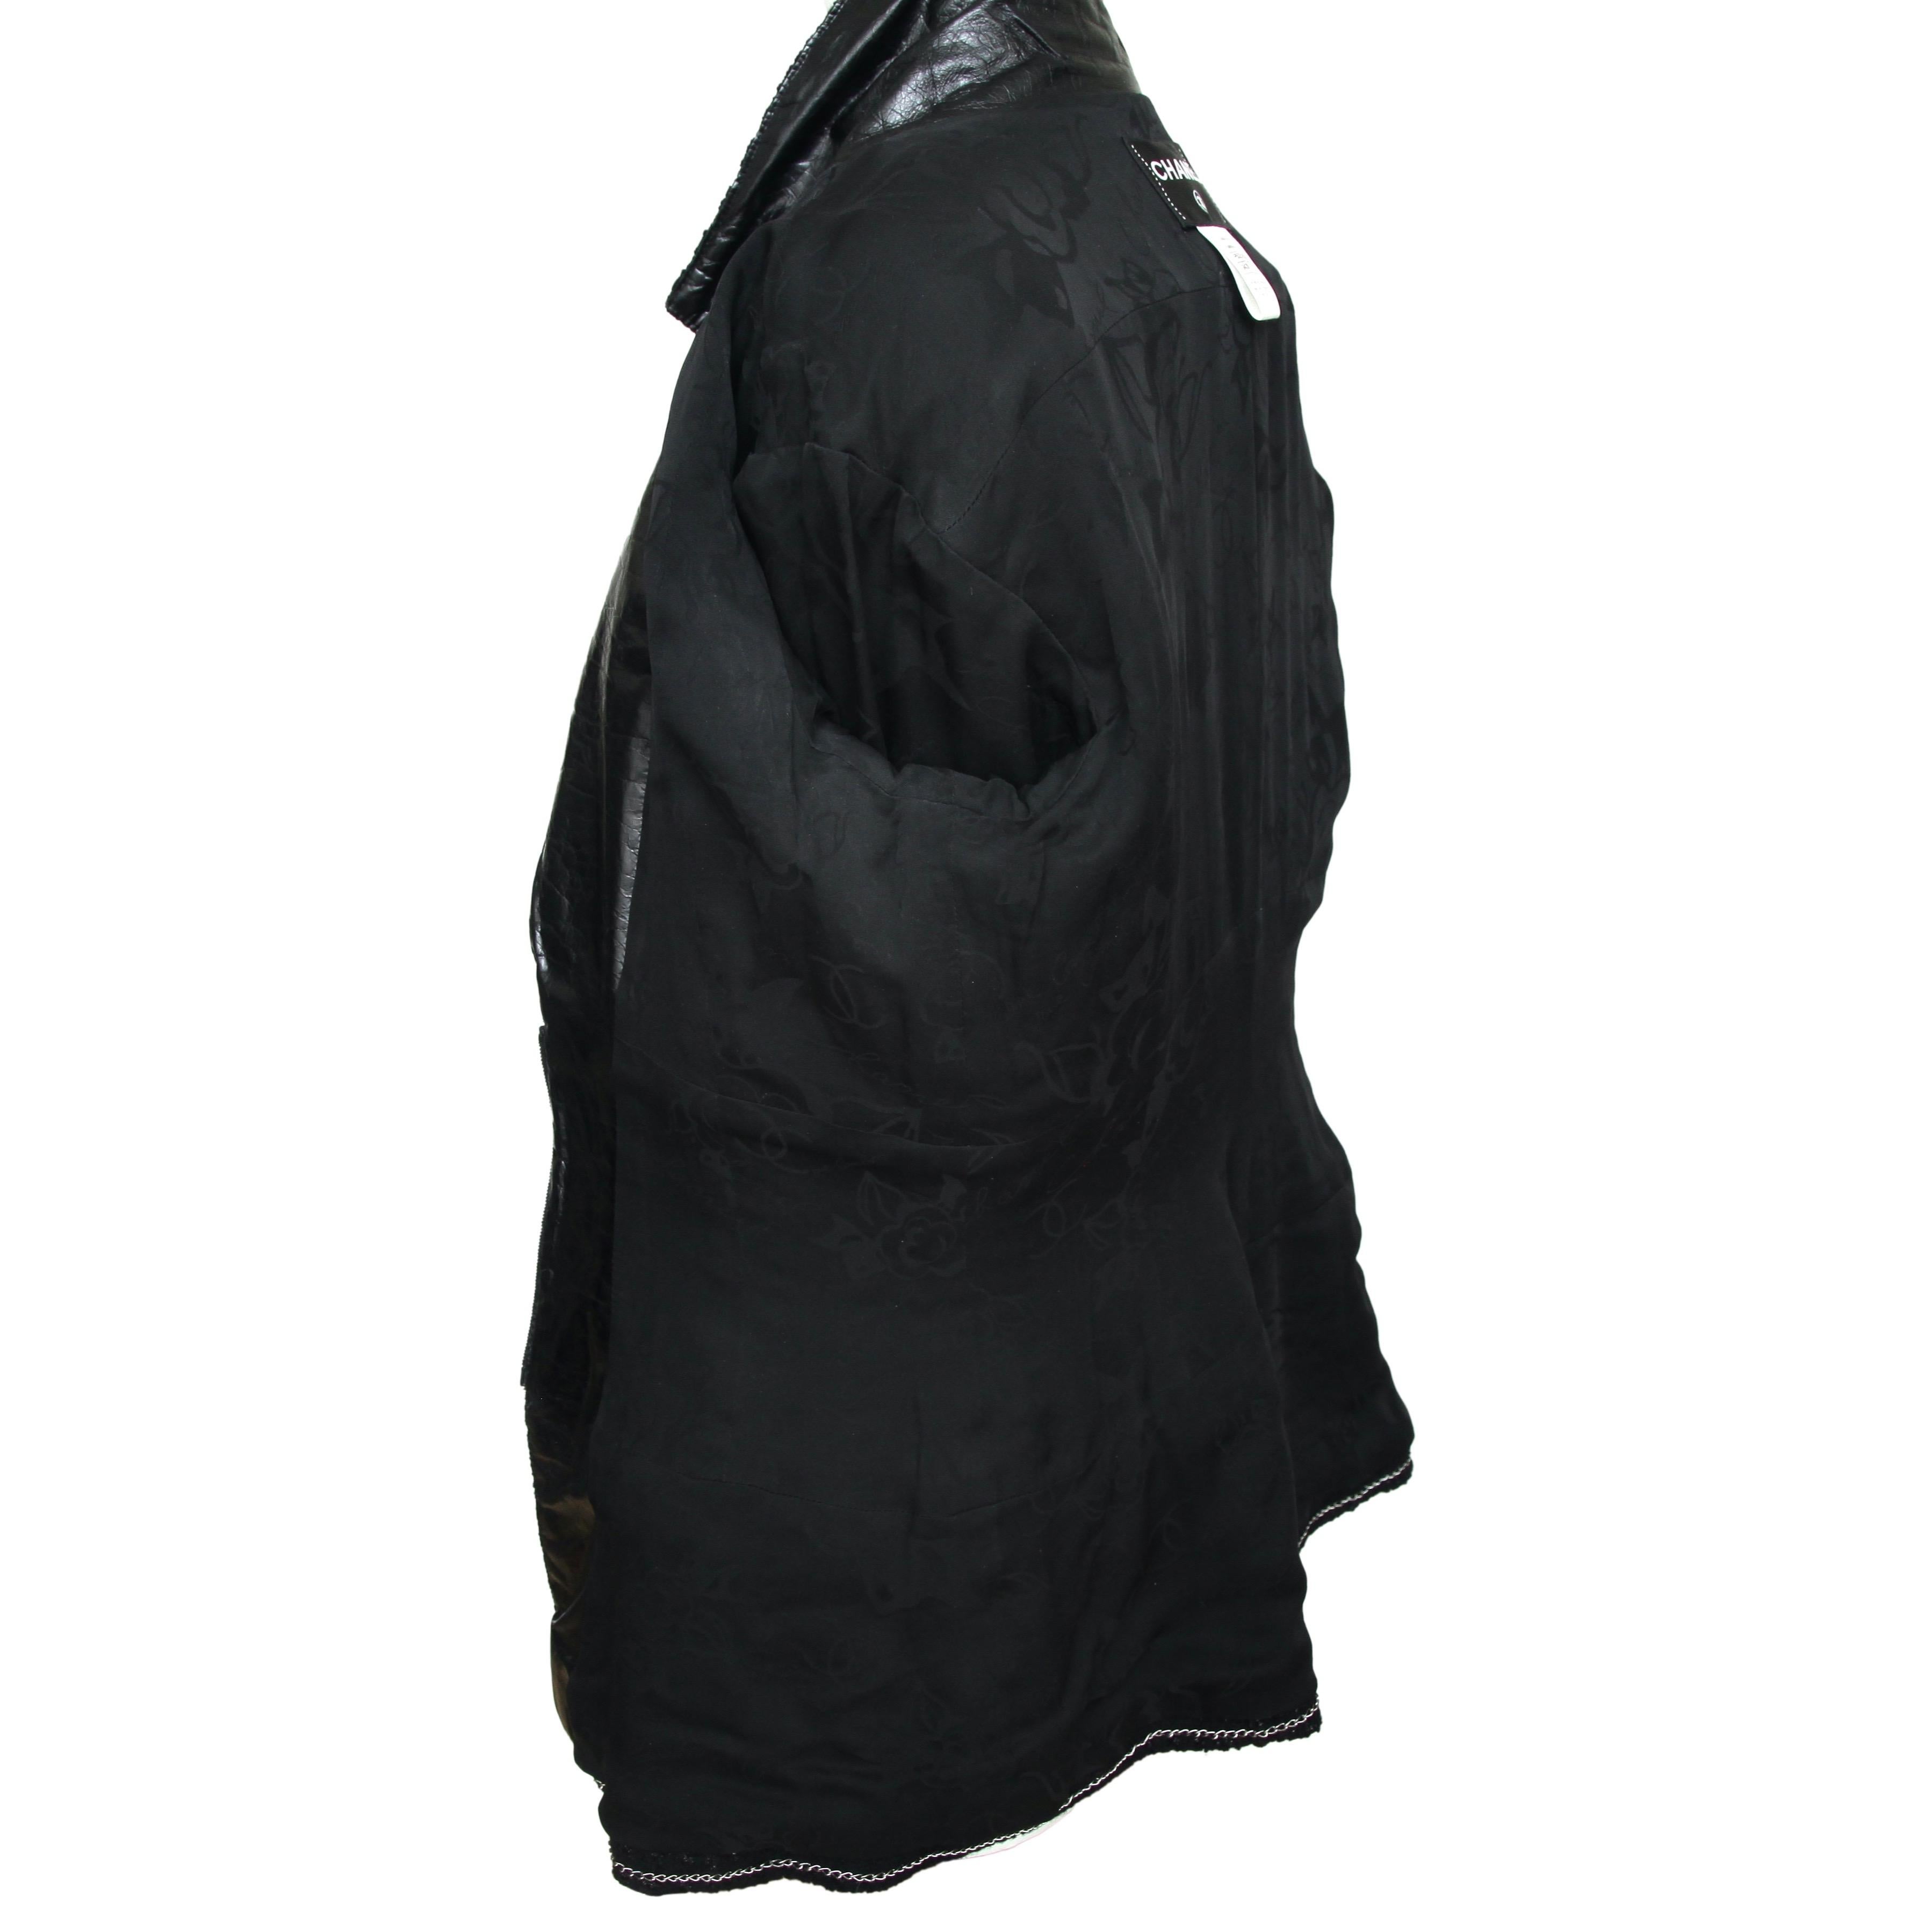 CHANEL Jacket Blazer Coat Tweed Black MetaIlic Leather Silver Chain Sz 42 2014 C For Sale 4